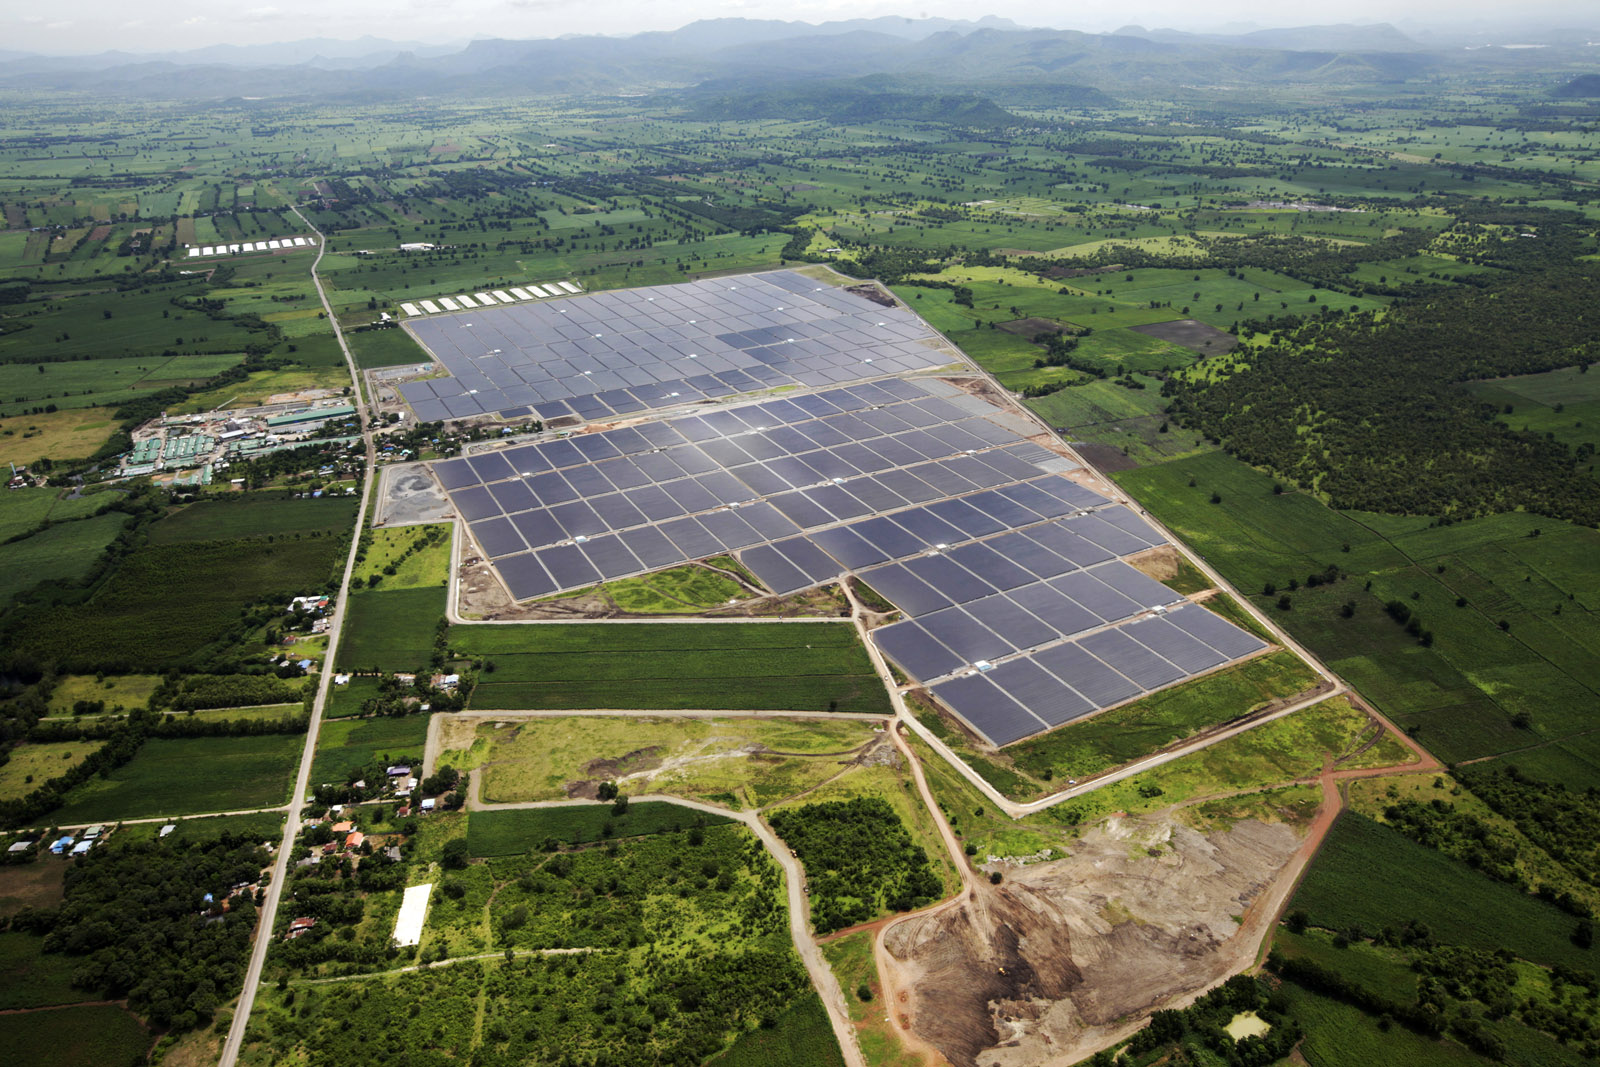 Aerial view of Lopburi Solar Farm in Thailand